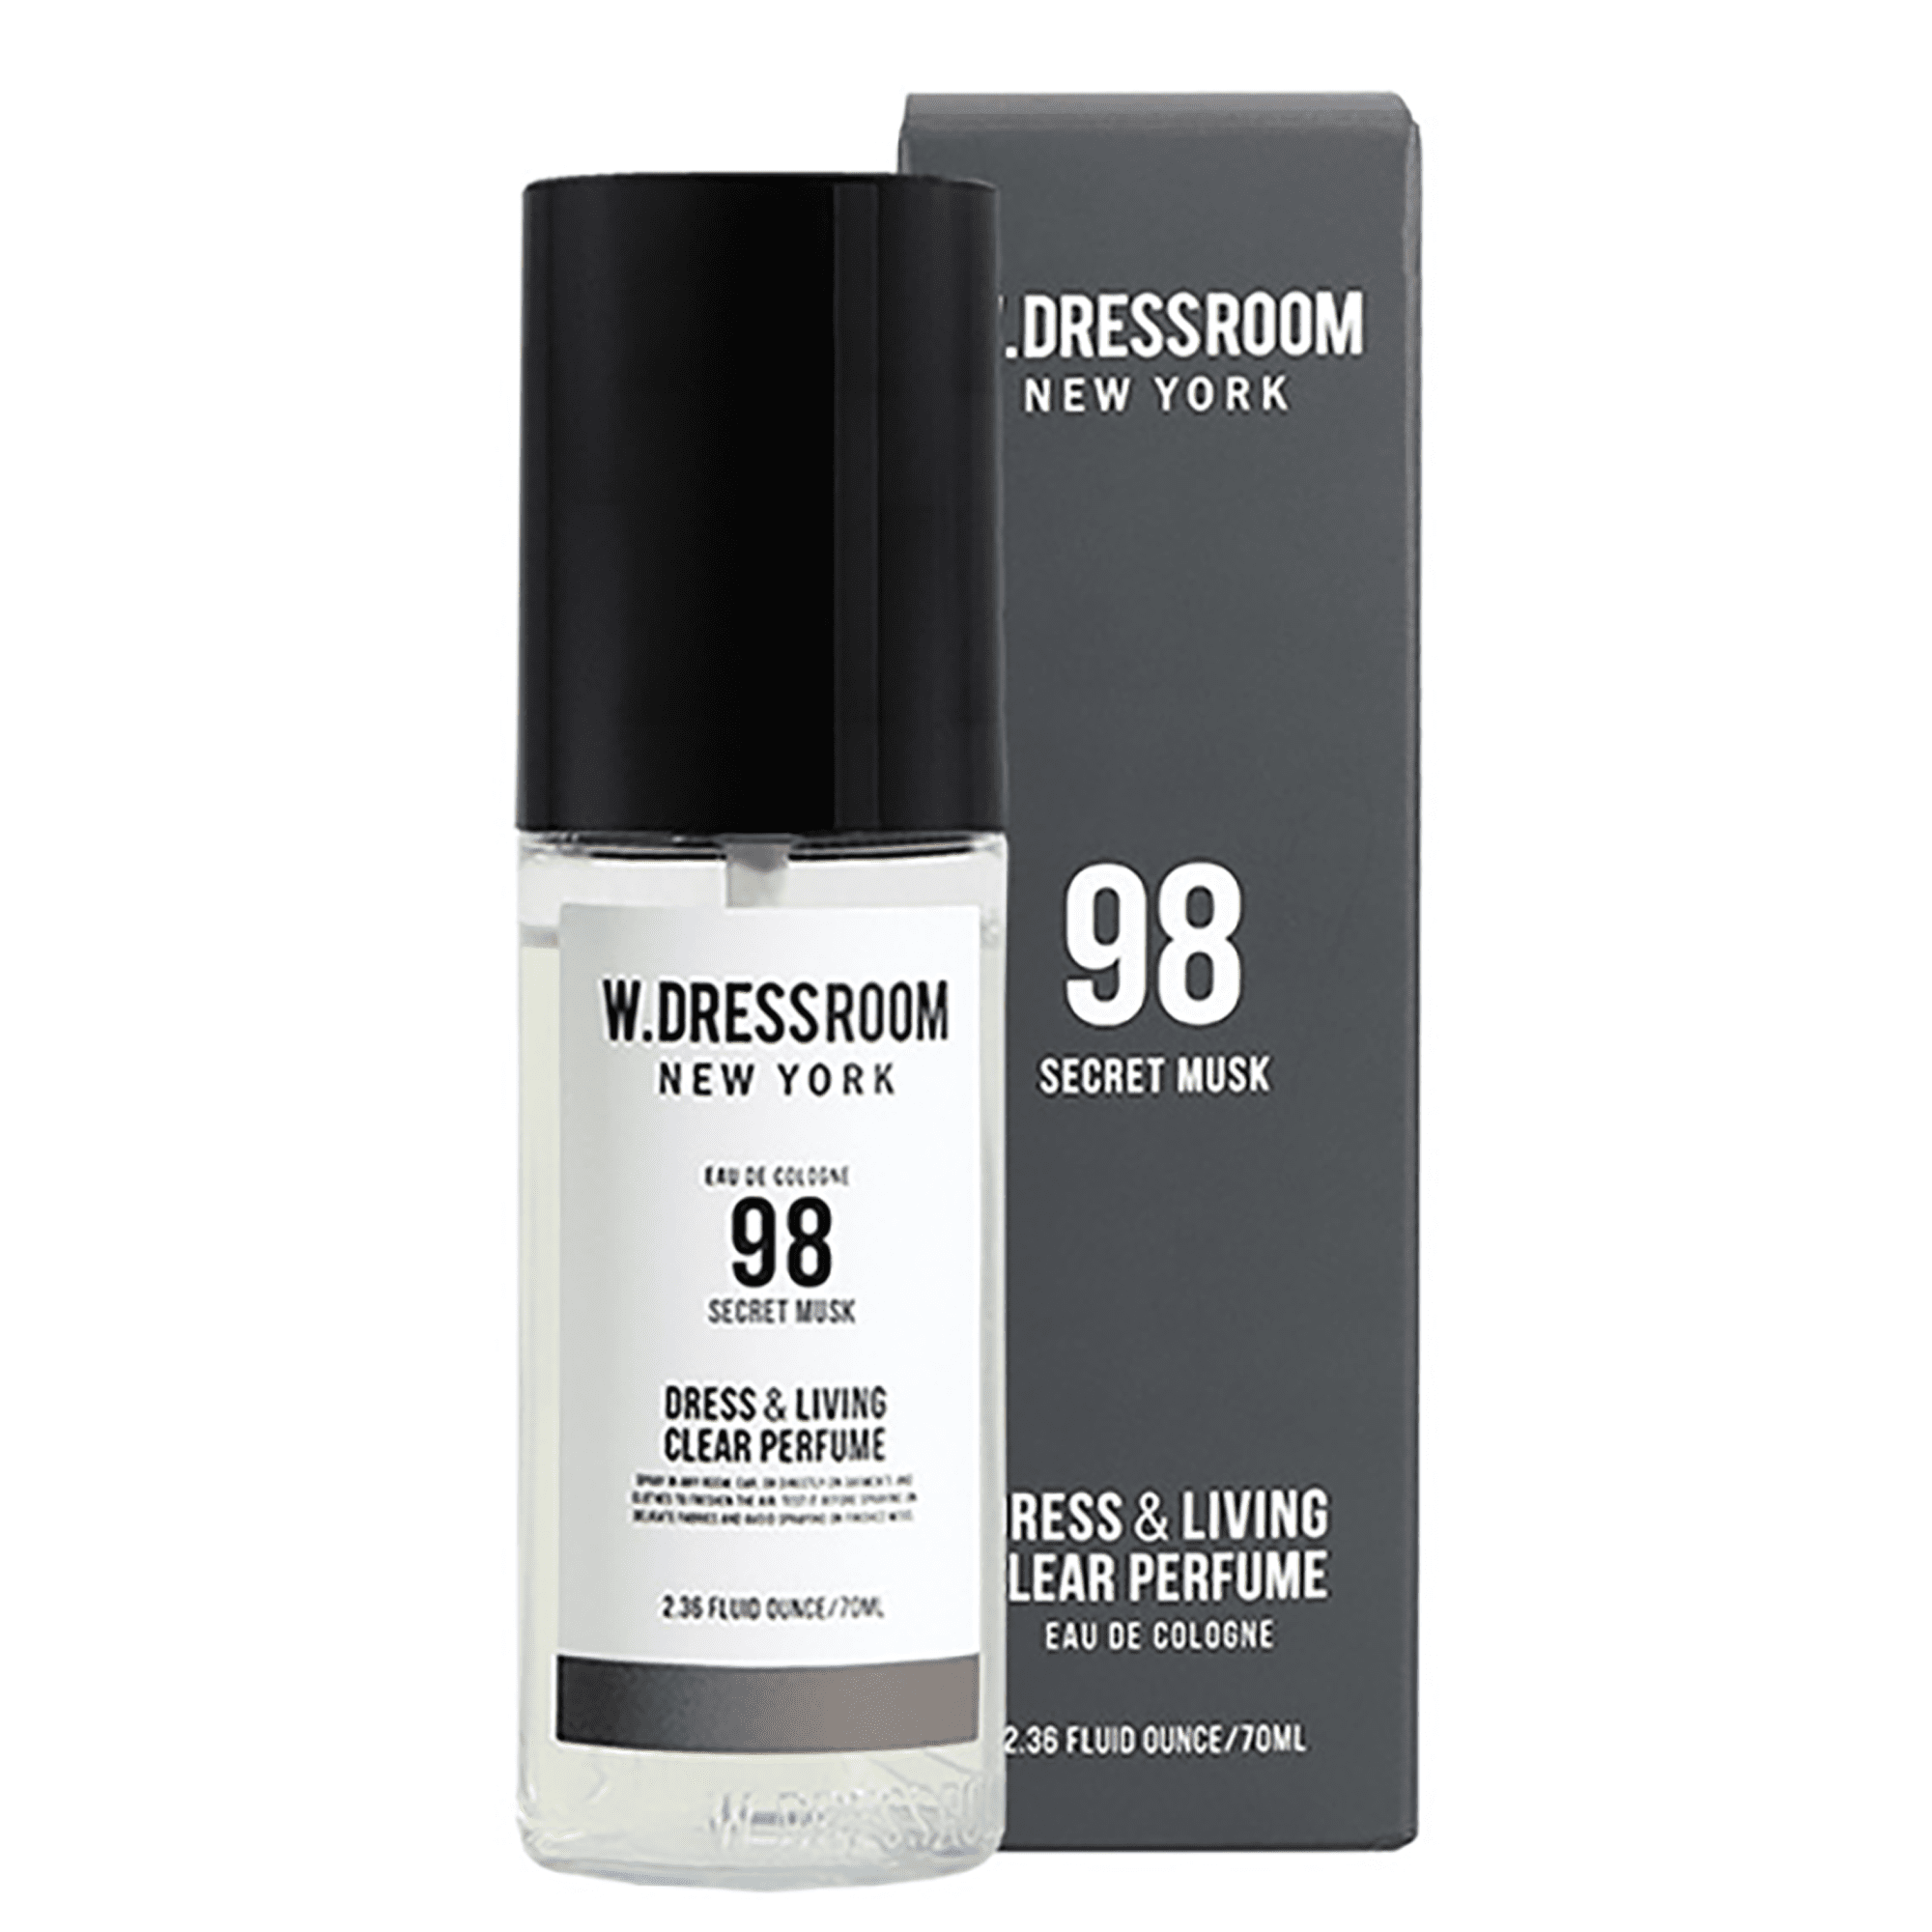 W.DRESSROOM - Dress & Living Season 2 Clear Perfume (No.98 Secret